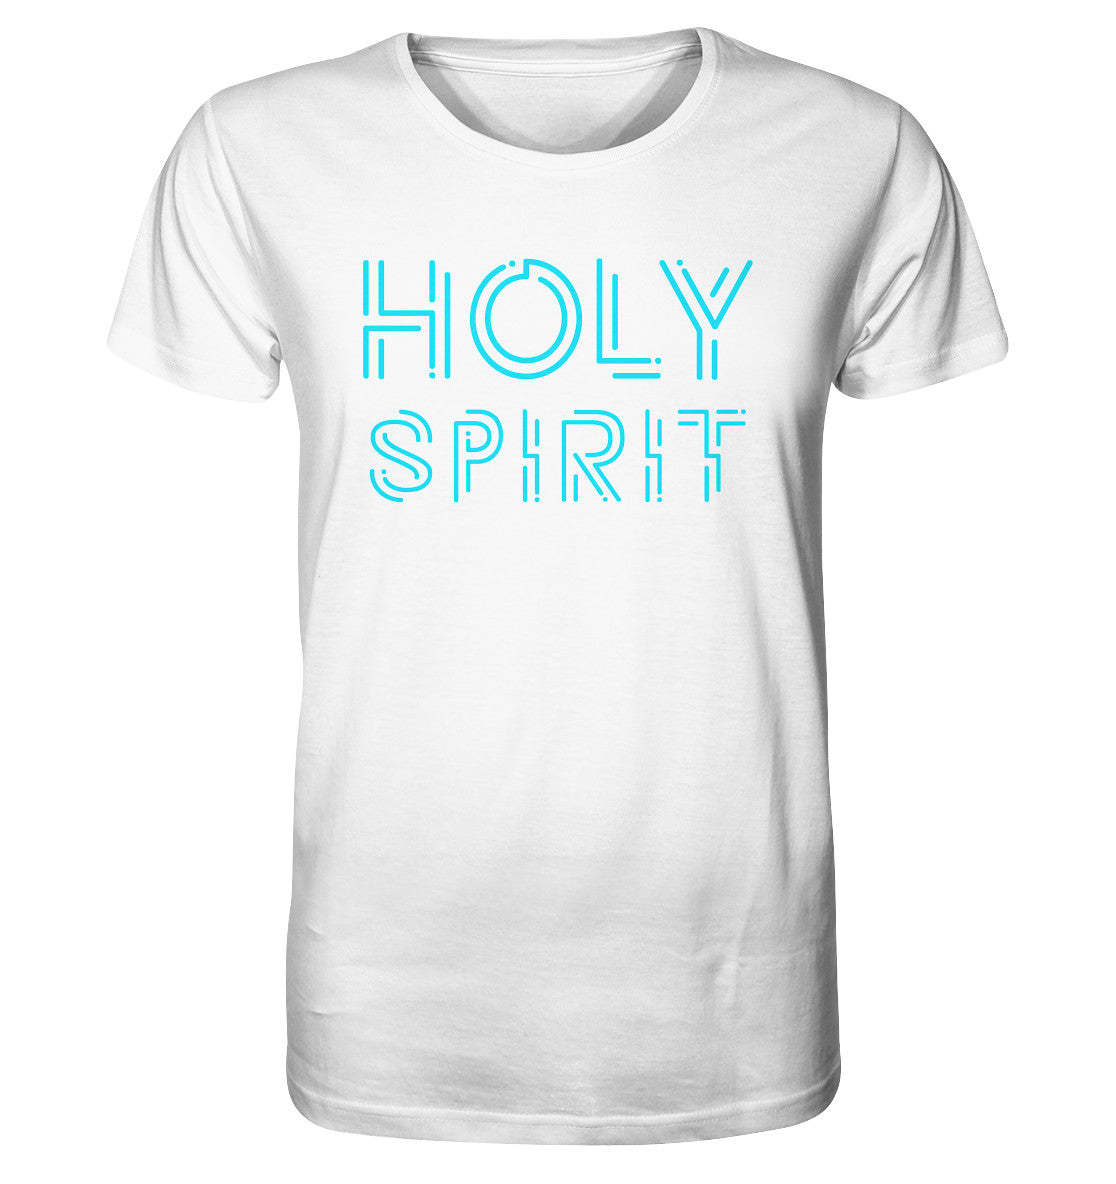 Holy Spirit - Organic Shirt